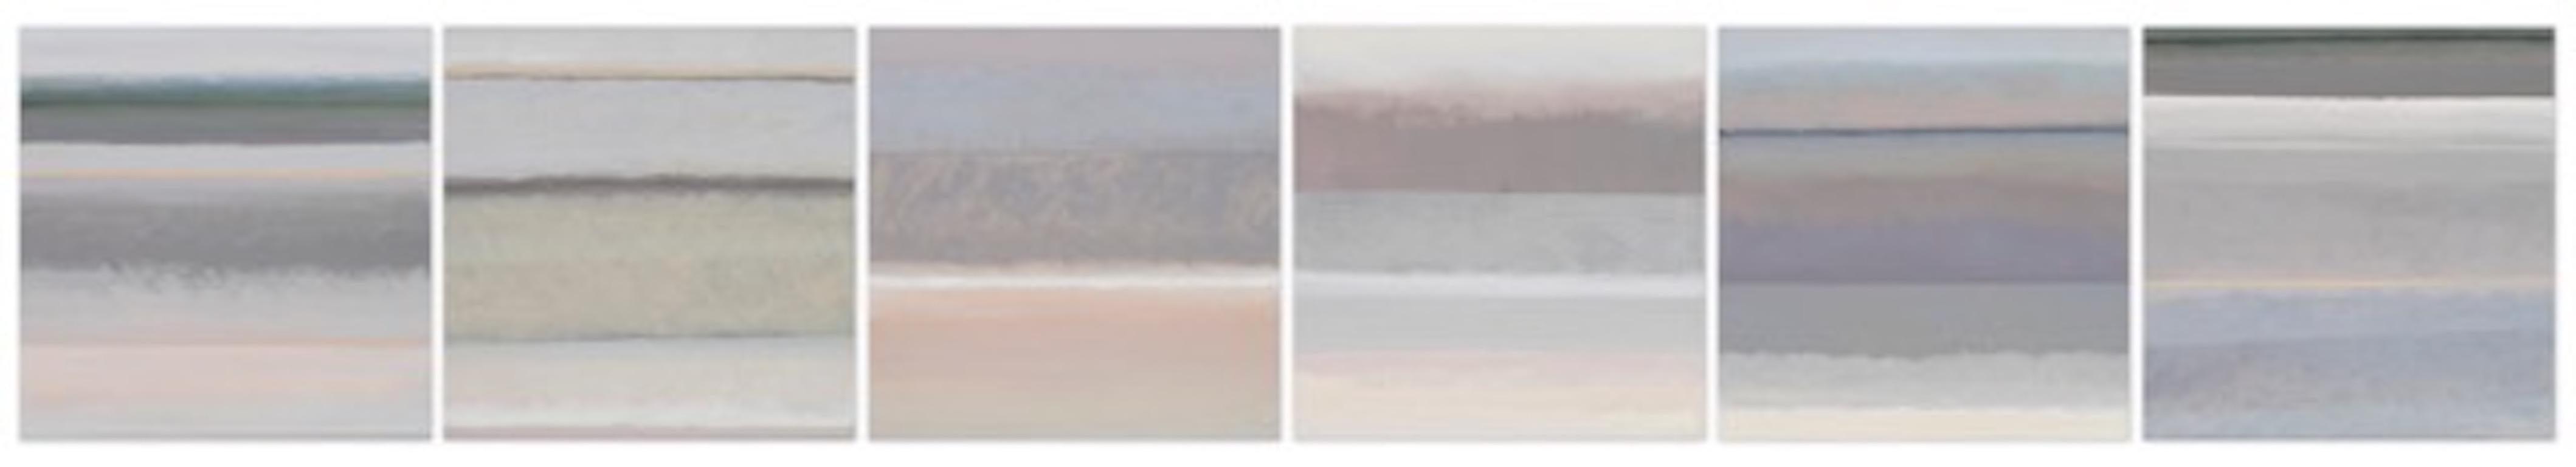 Janet Jennings Landscape Painting - Grey of Grey